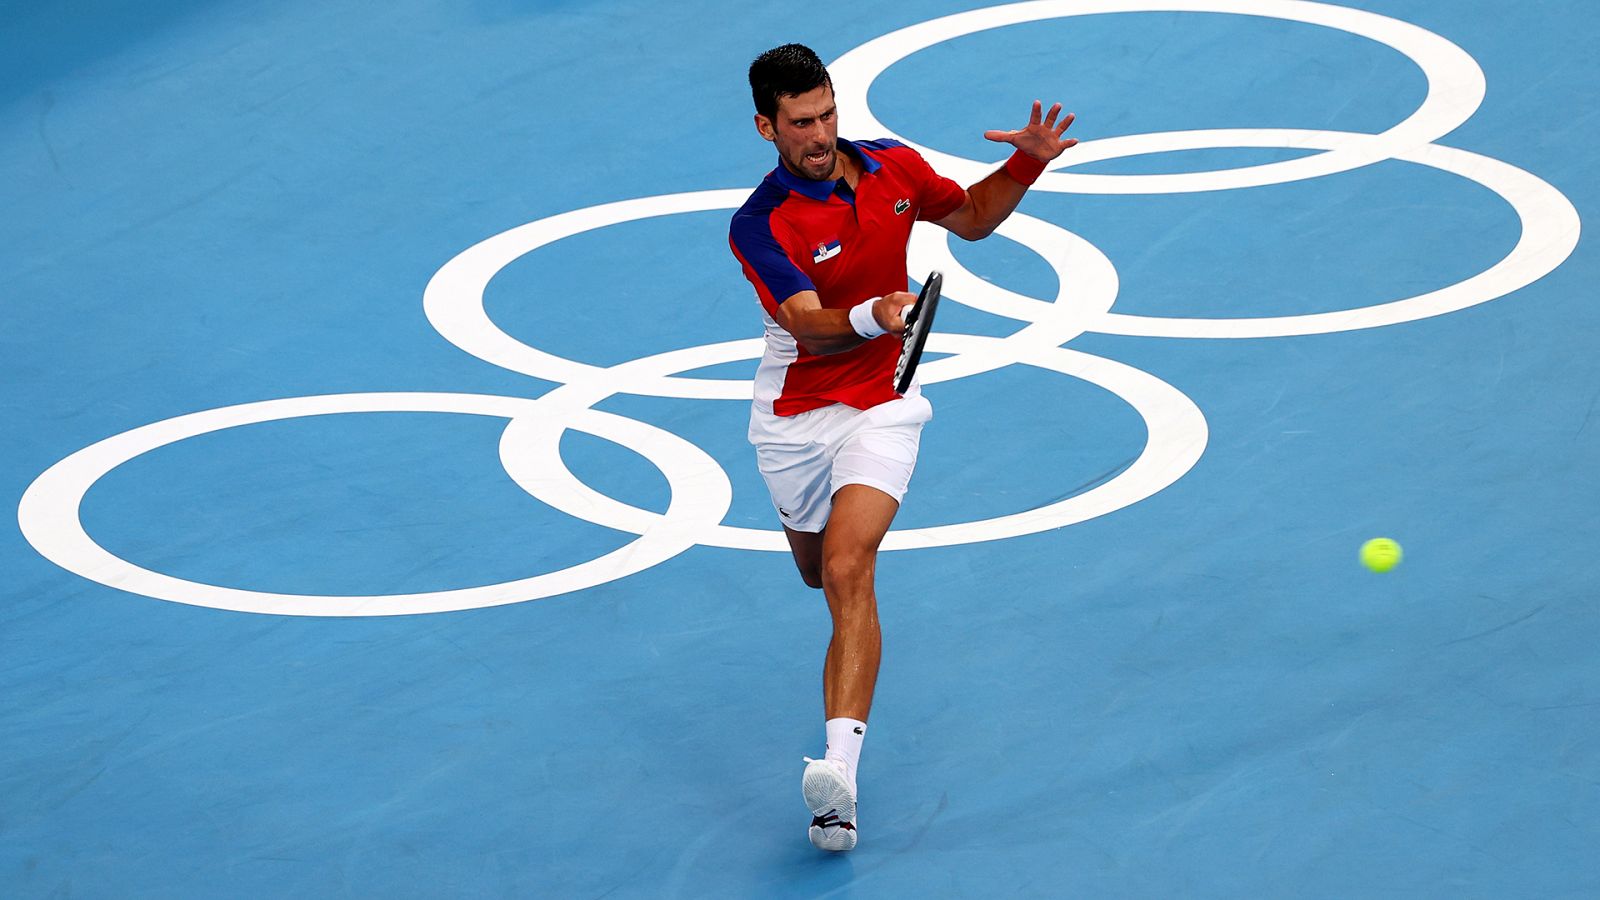 Tenis. Semifinal masculina individual: N. Djokovic - A. Zverev | Tokio 2020